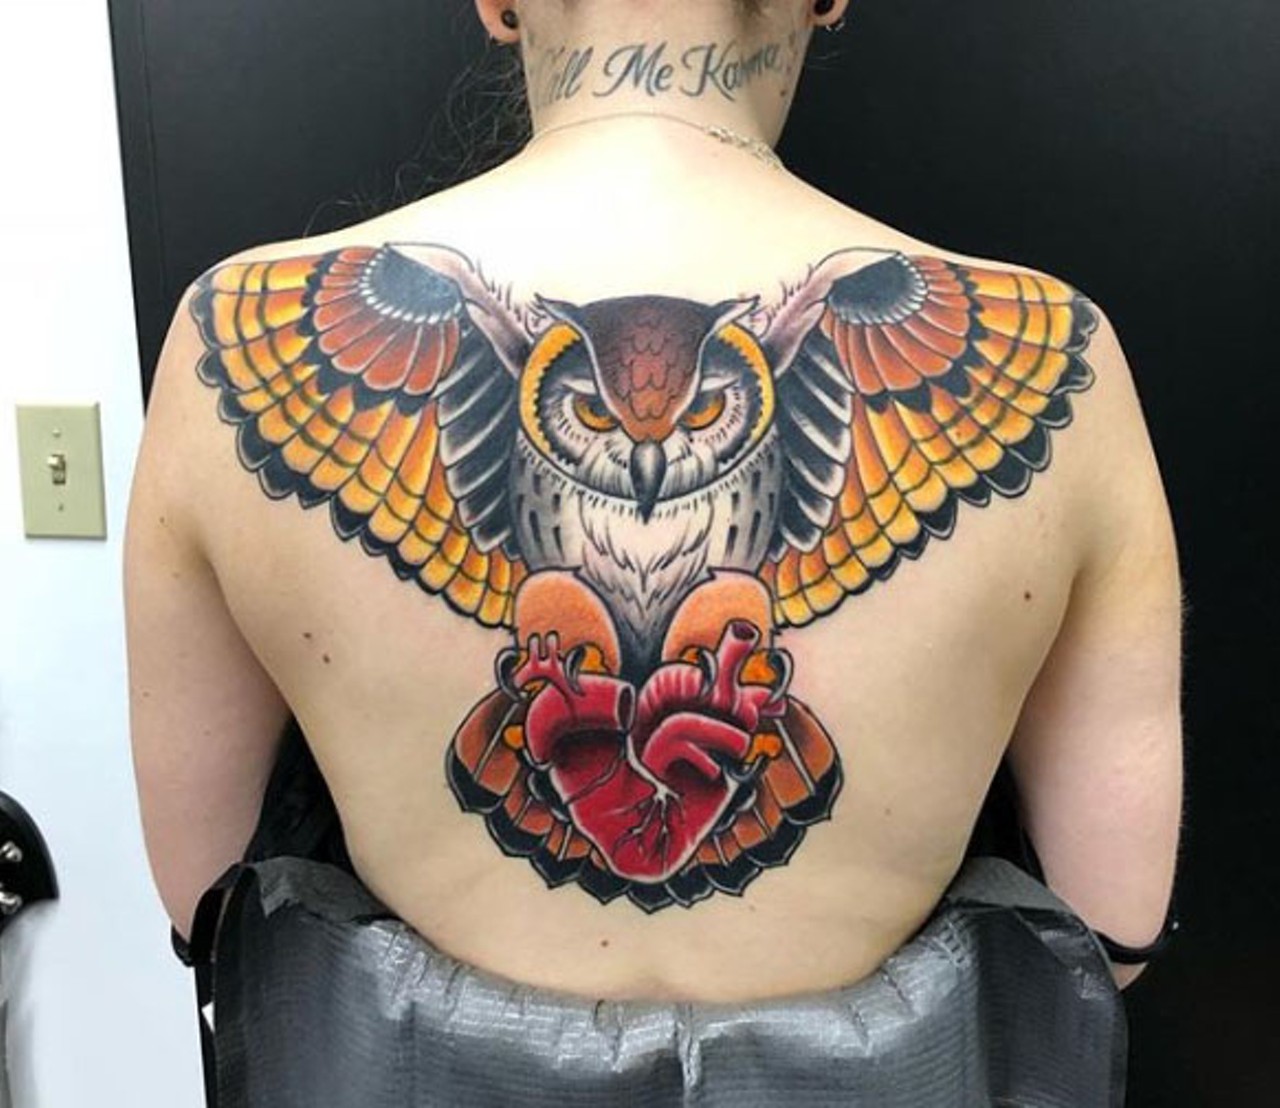 Heart and Soul Tattoo Studio